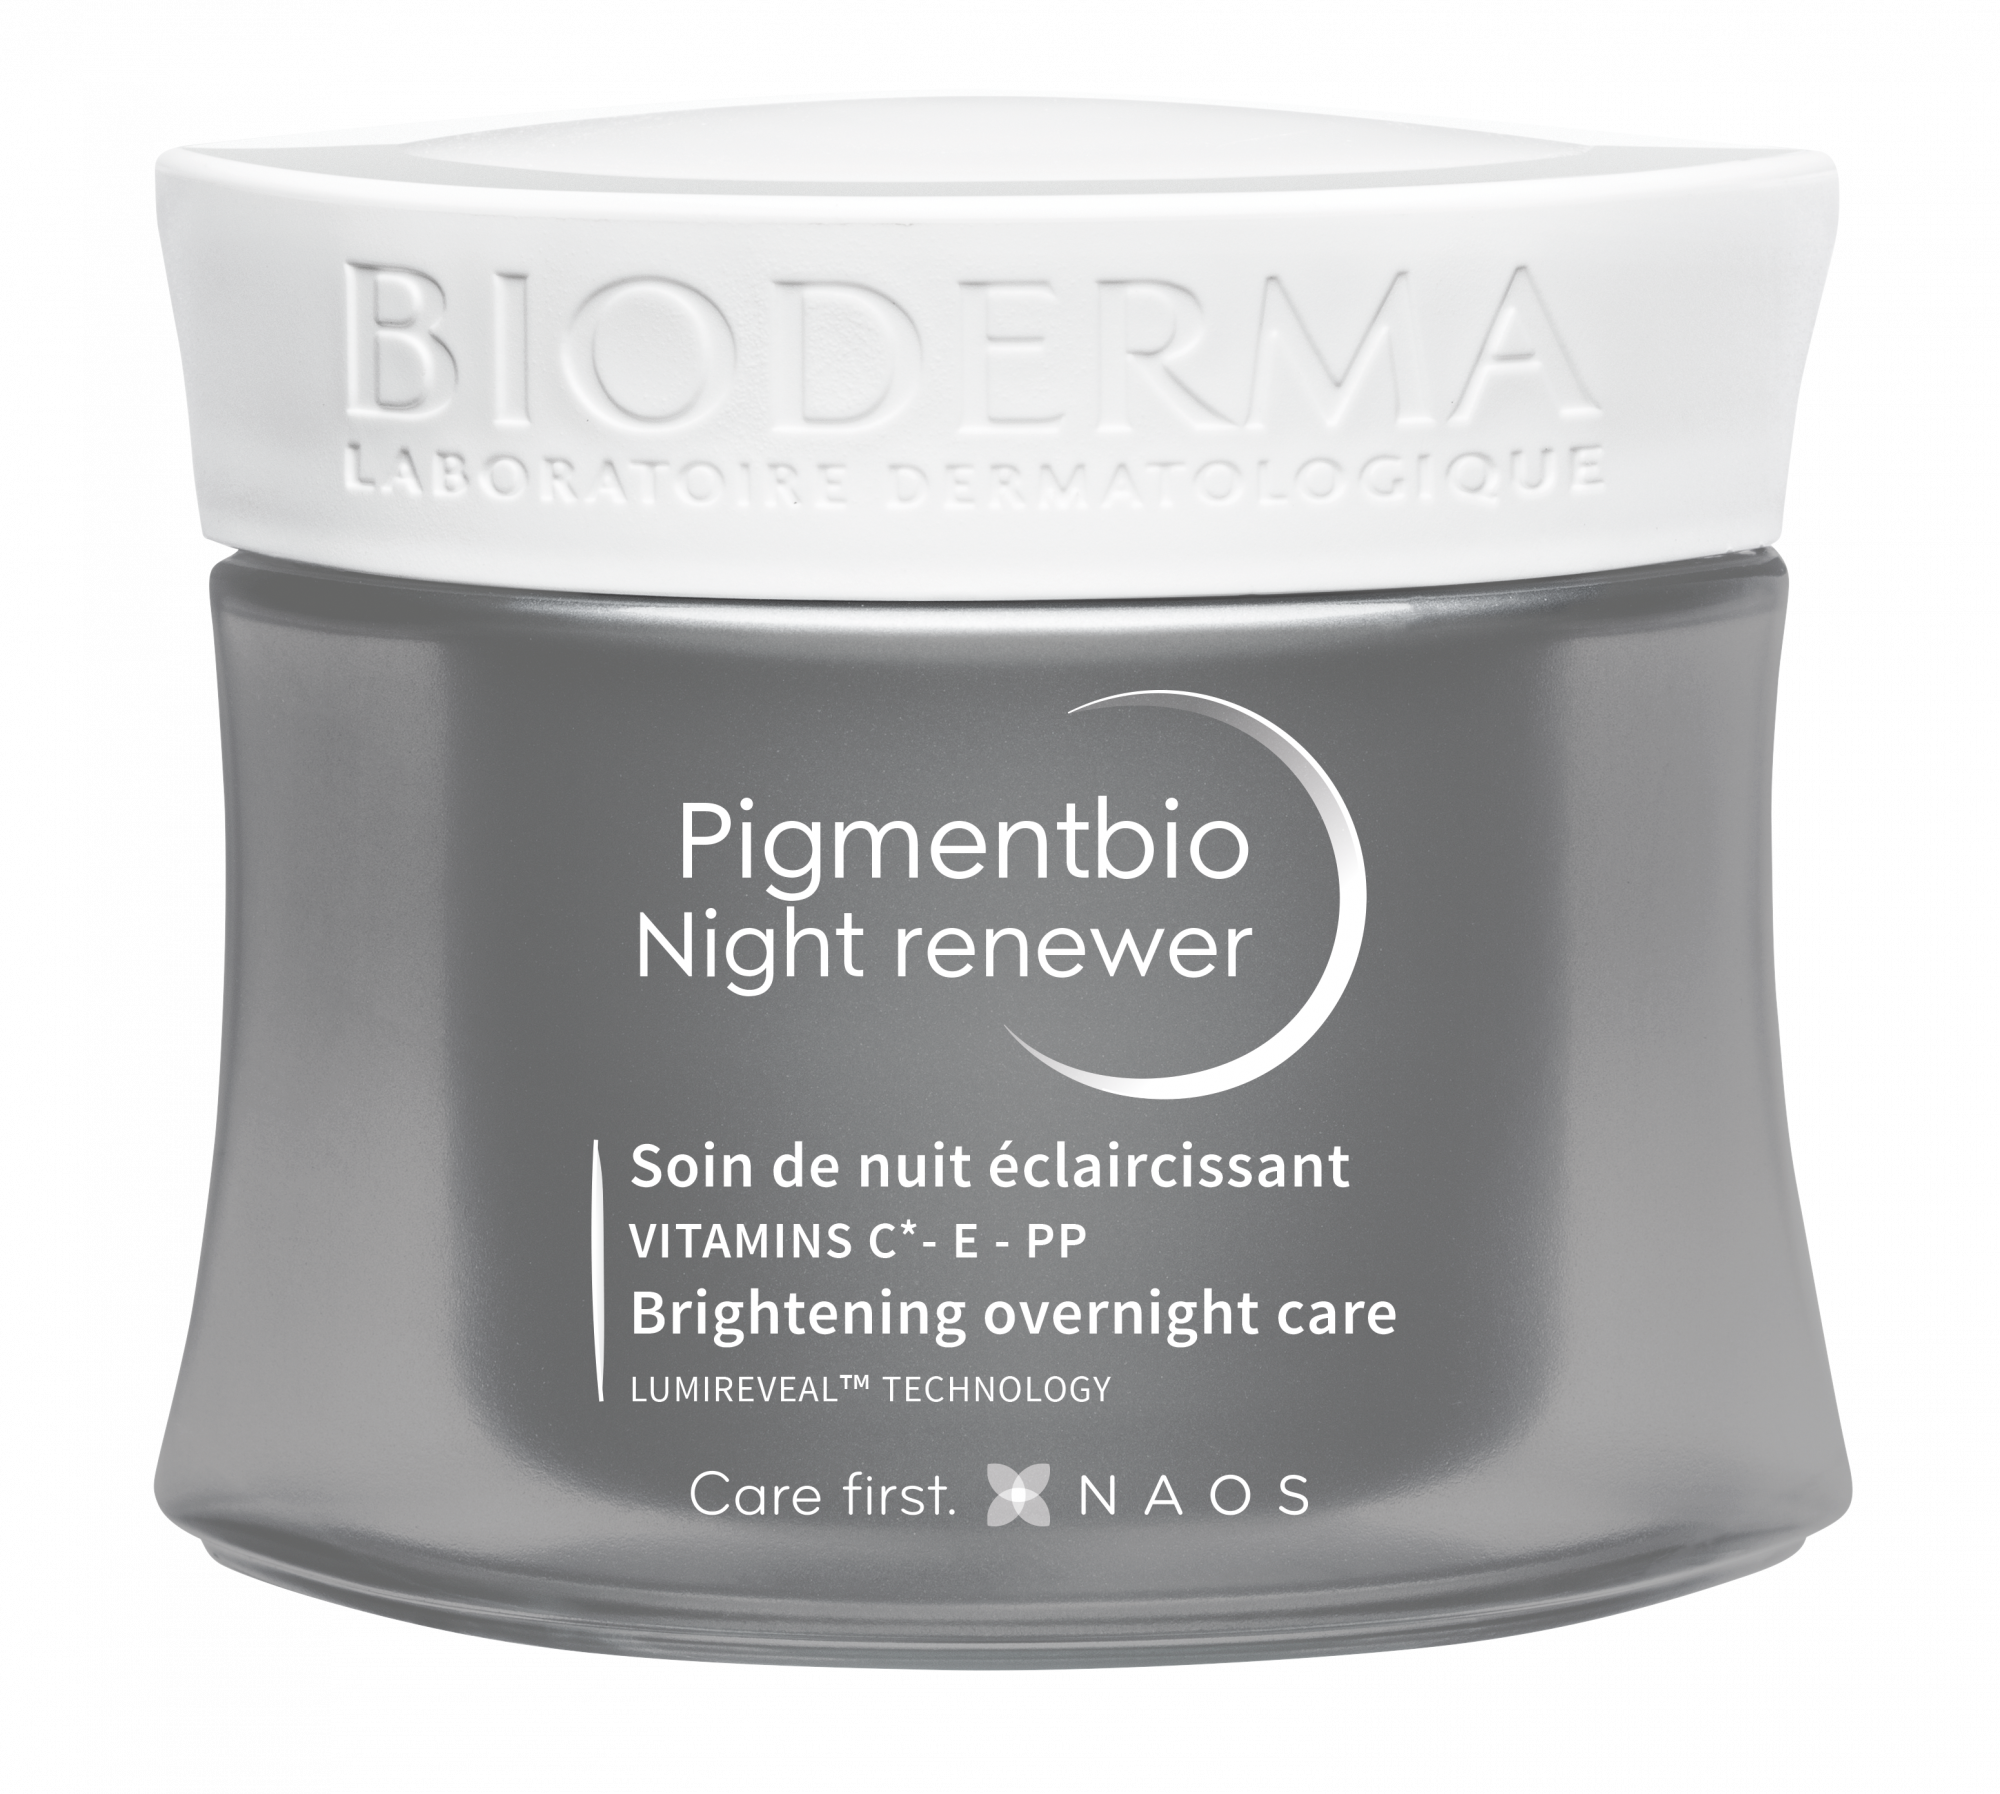 Buy  Bioderma Pigmentbio Night Renewer - 50ml - at Best Price Online in Pakistan